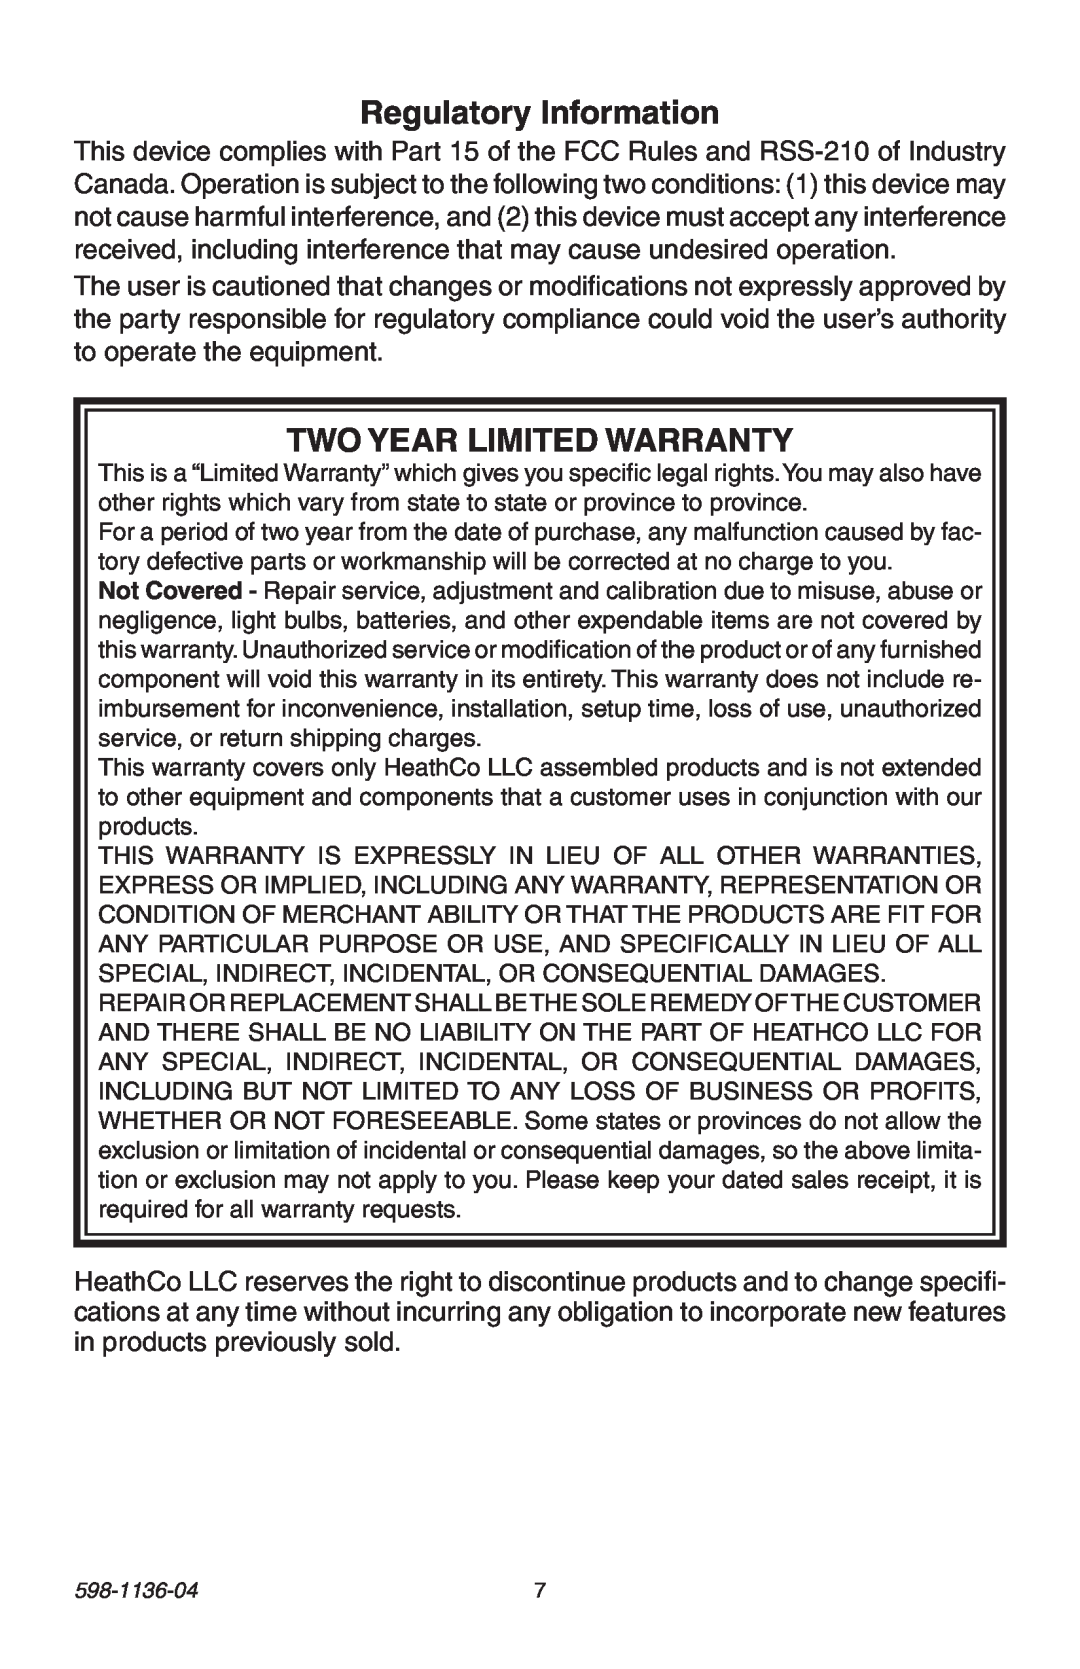 Heath Zenith 598-1136-04 manual Regulatory Information, Two Year Limited Warranty 